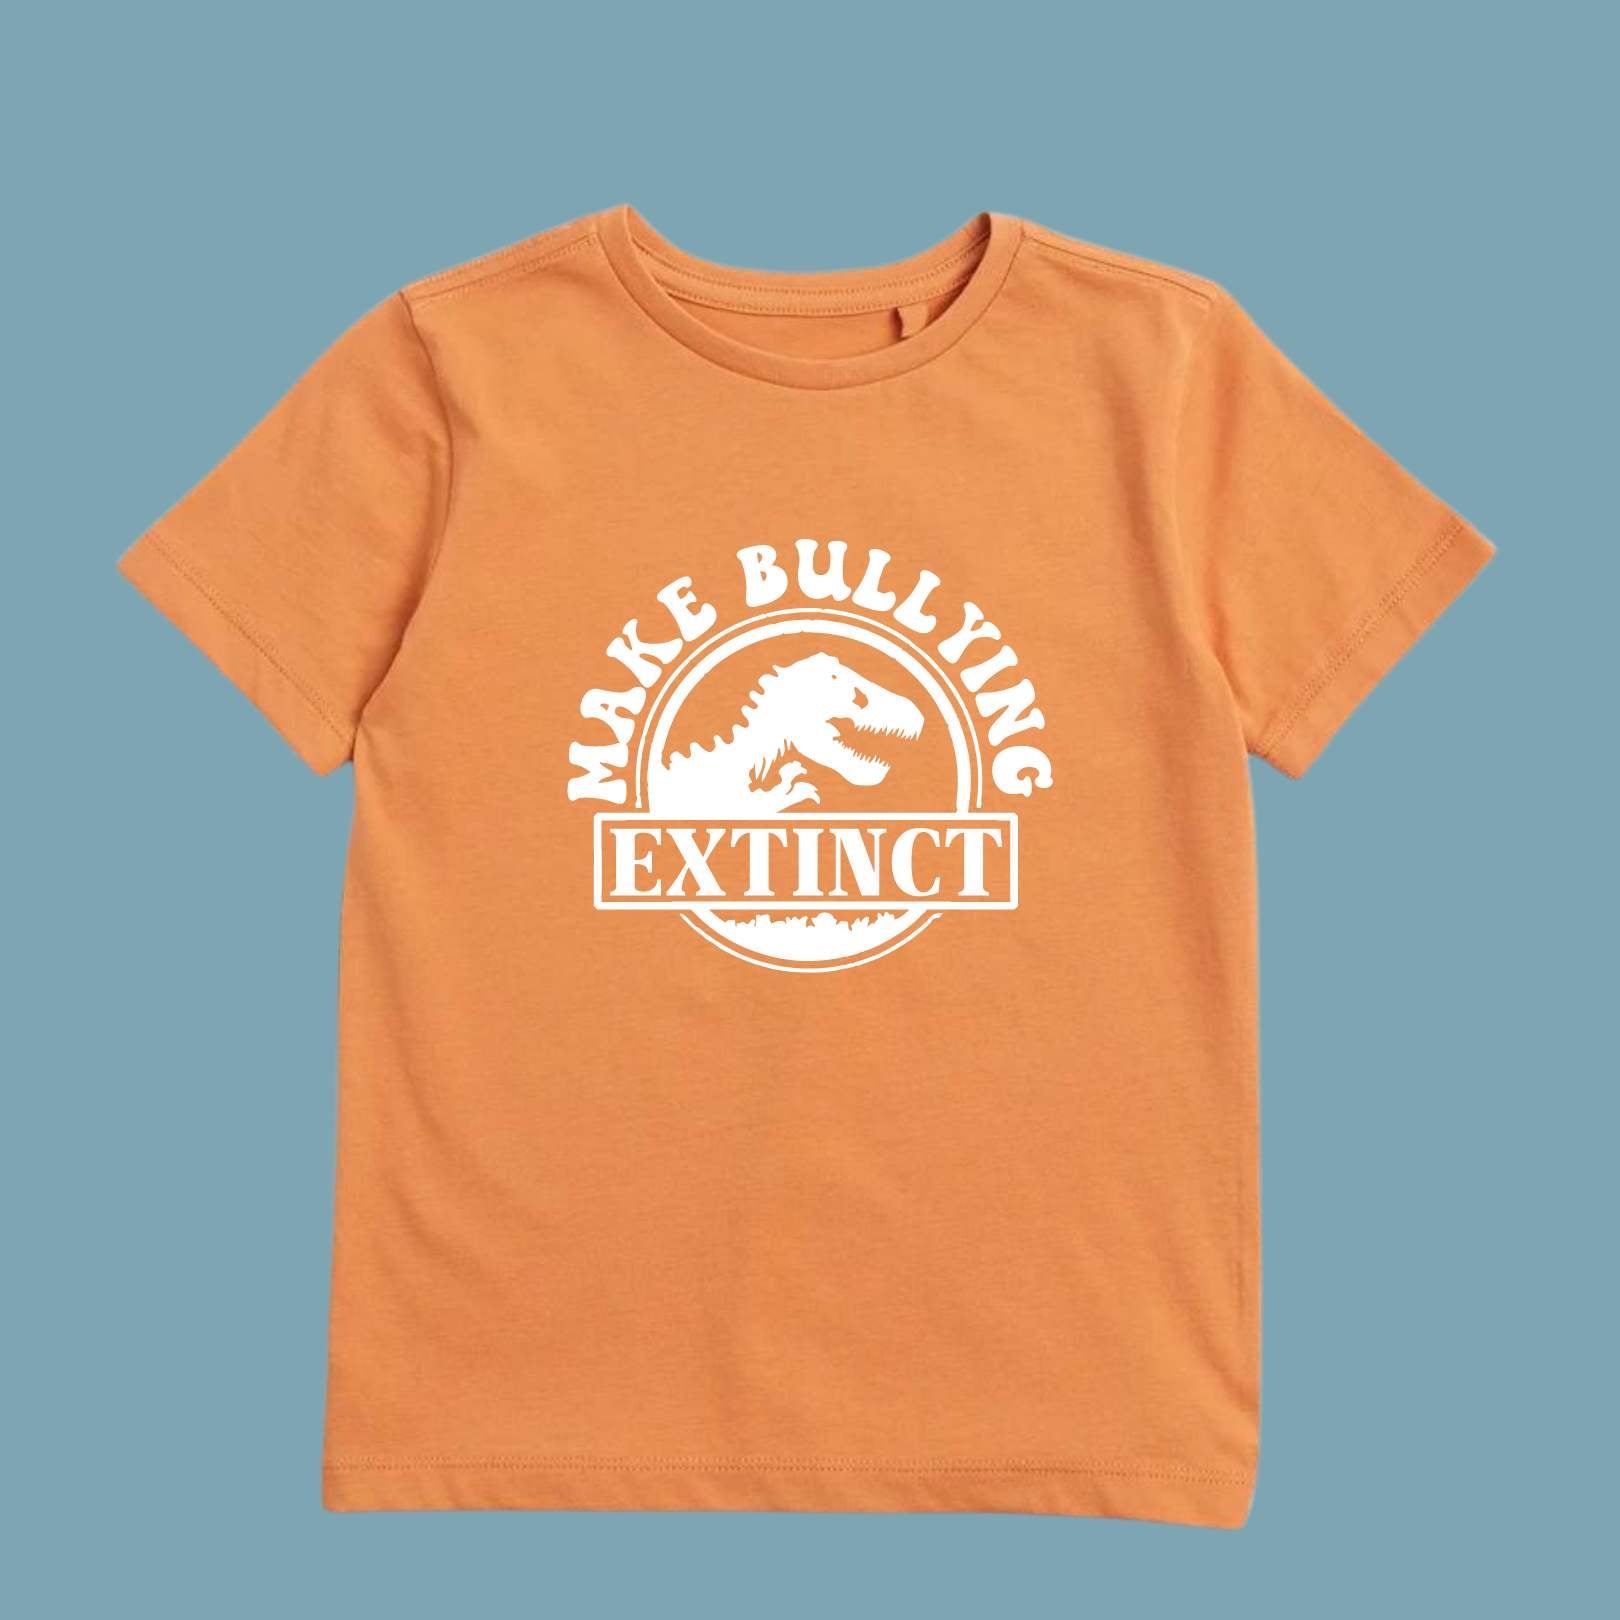 jurassic park style tshirt. kids bullying. harmony day. orange shirt. make bullying extinct